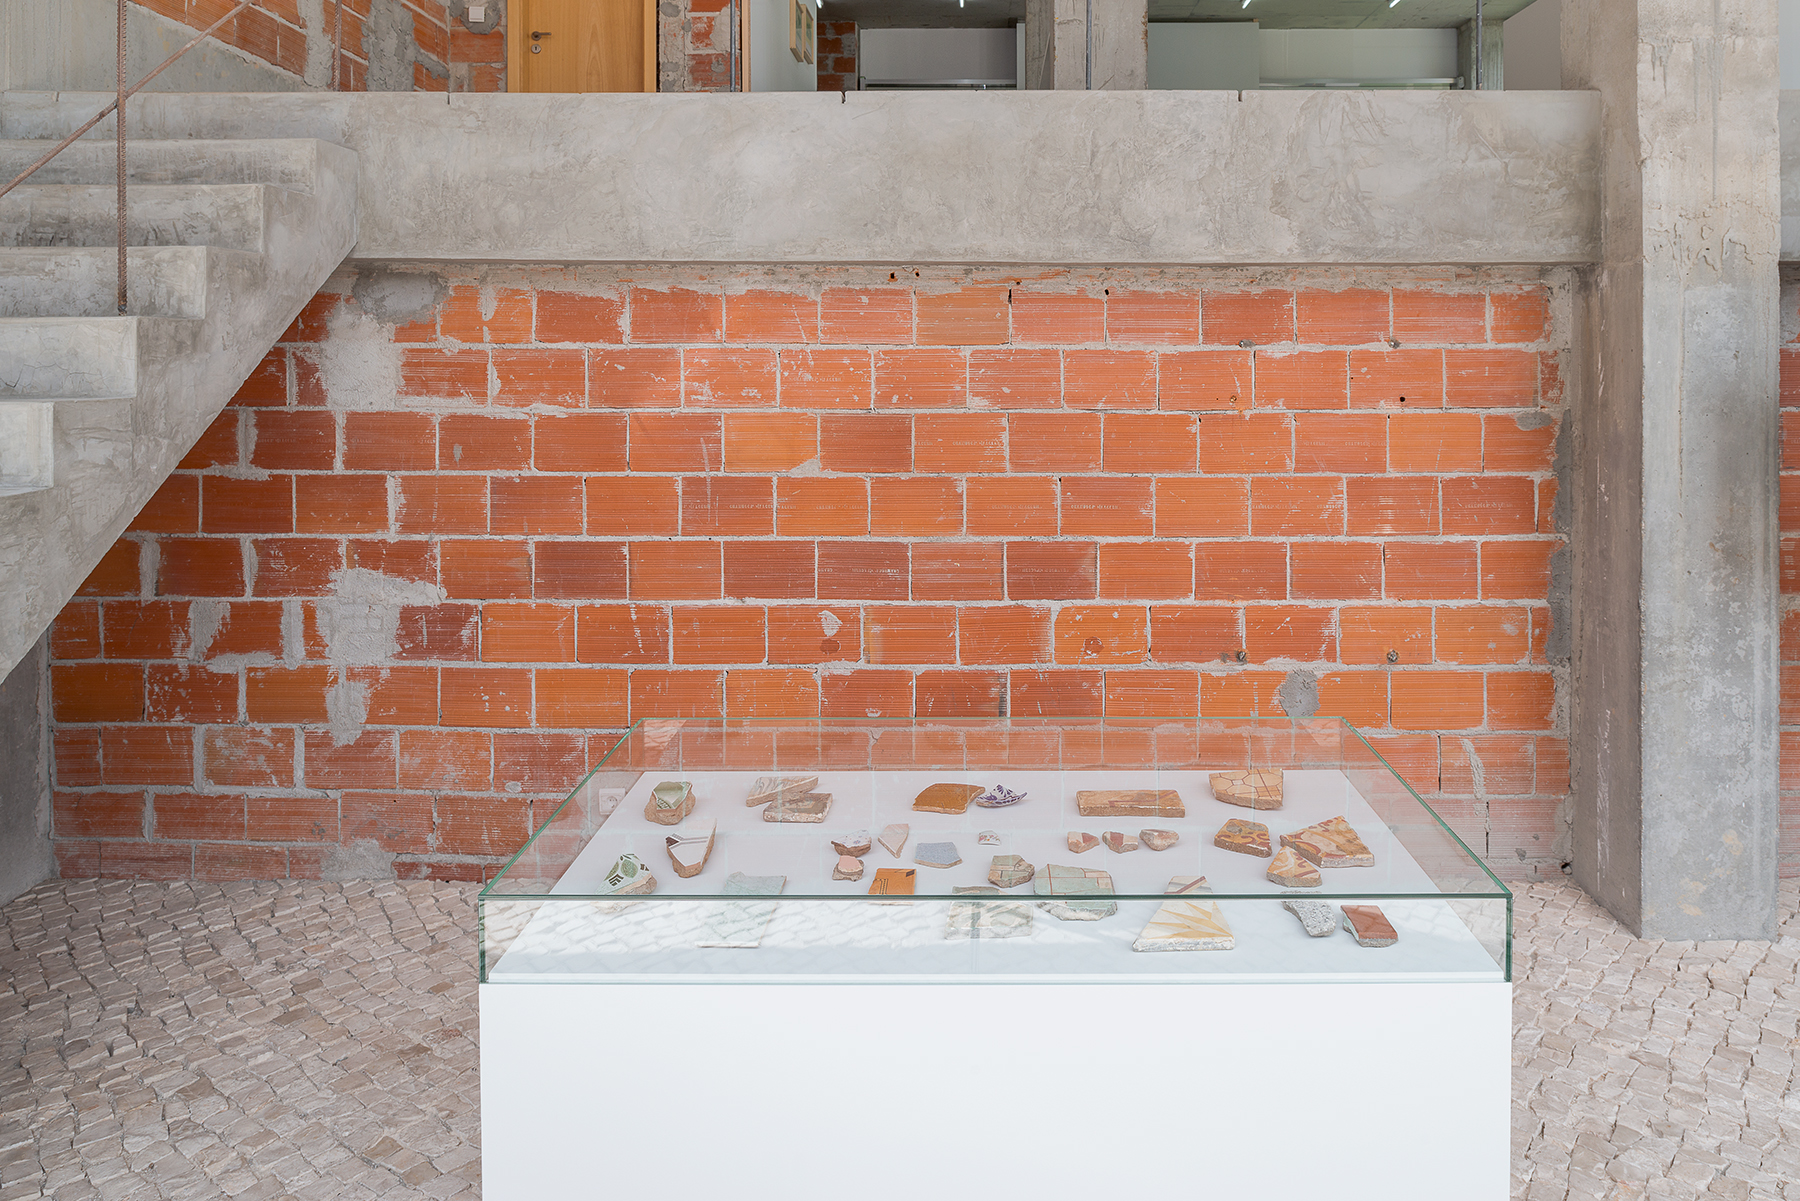 Tiffany Chung. Thu Thiêm: an archaeological project for future remembrance. Lumiar Cité. 2019.